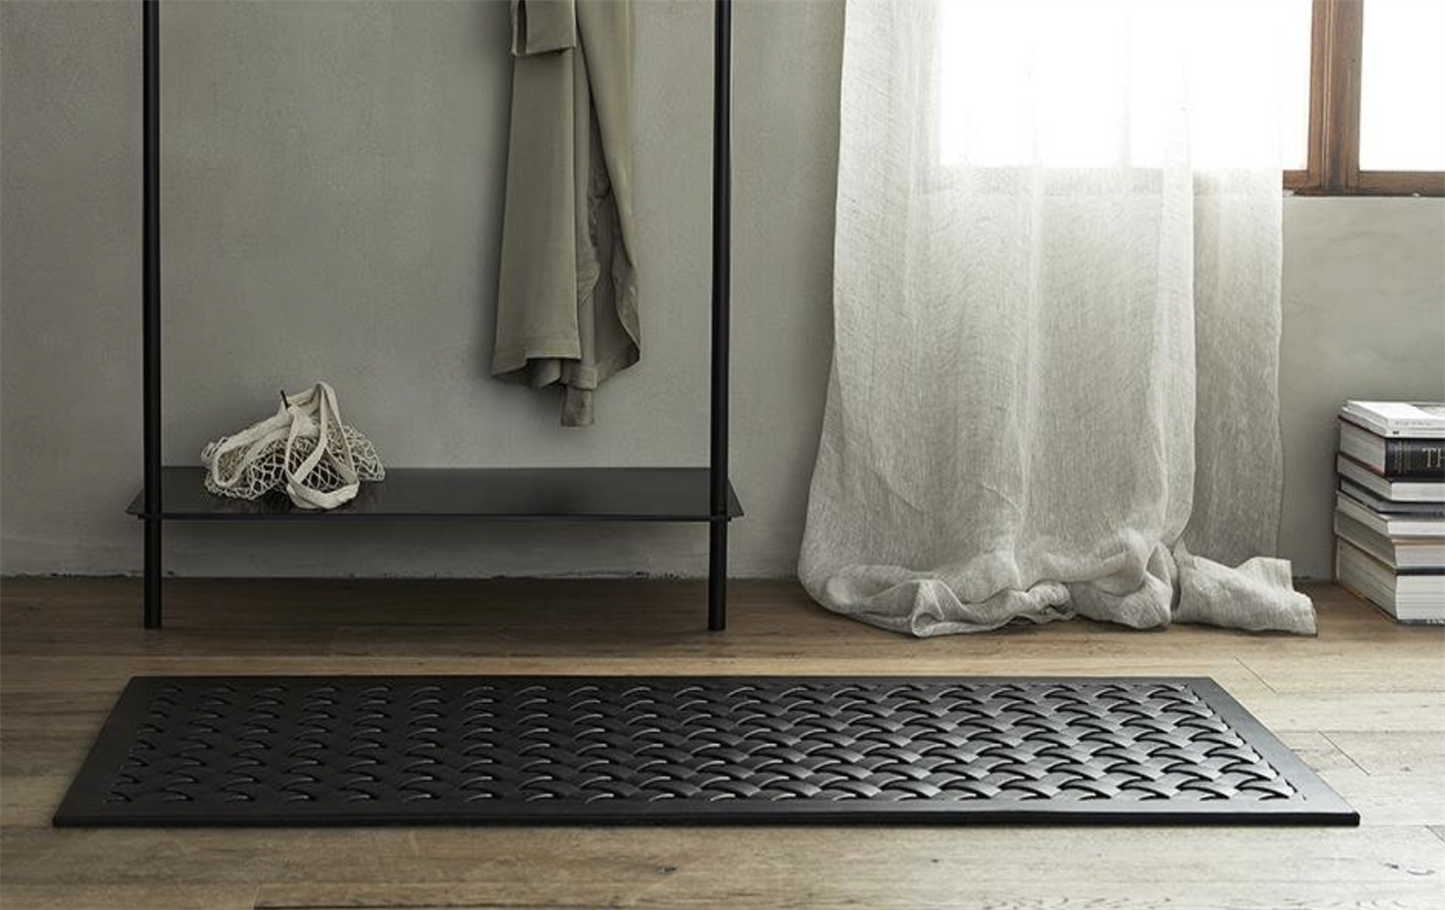 Doormat, weaving, square, black rubber 61x142cm